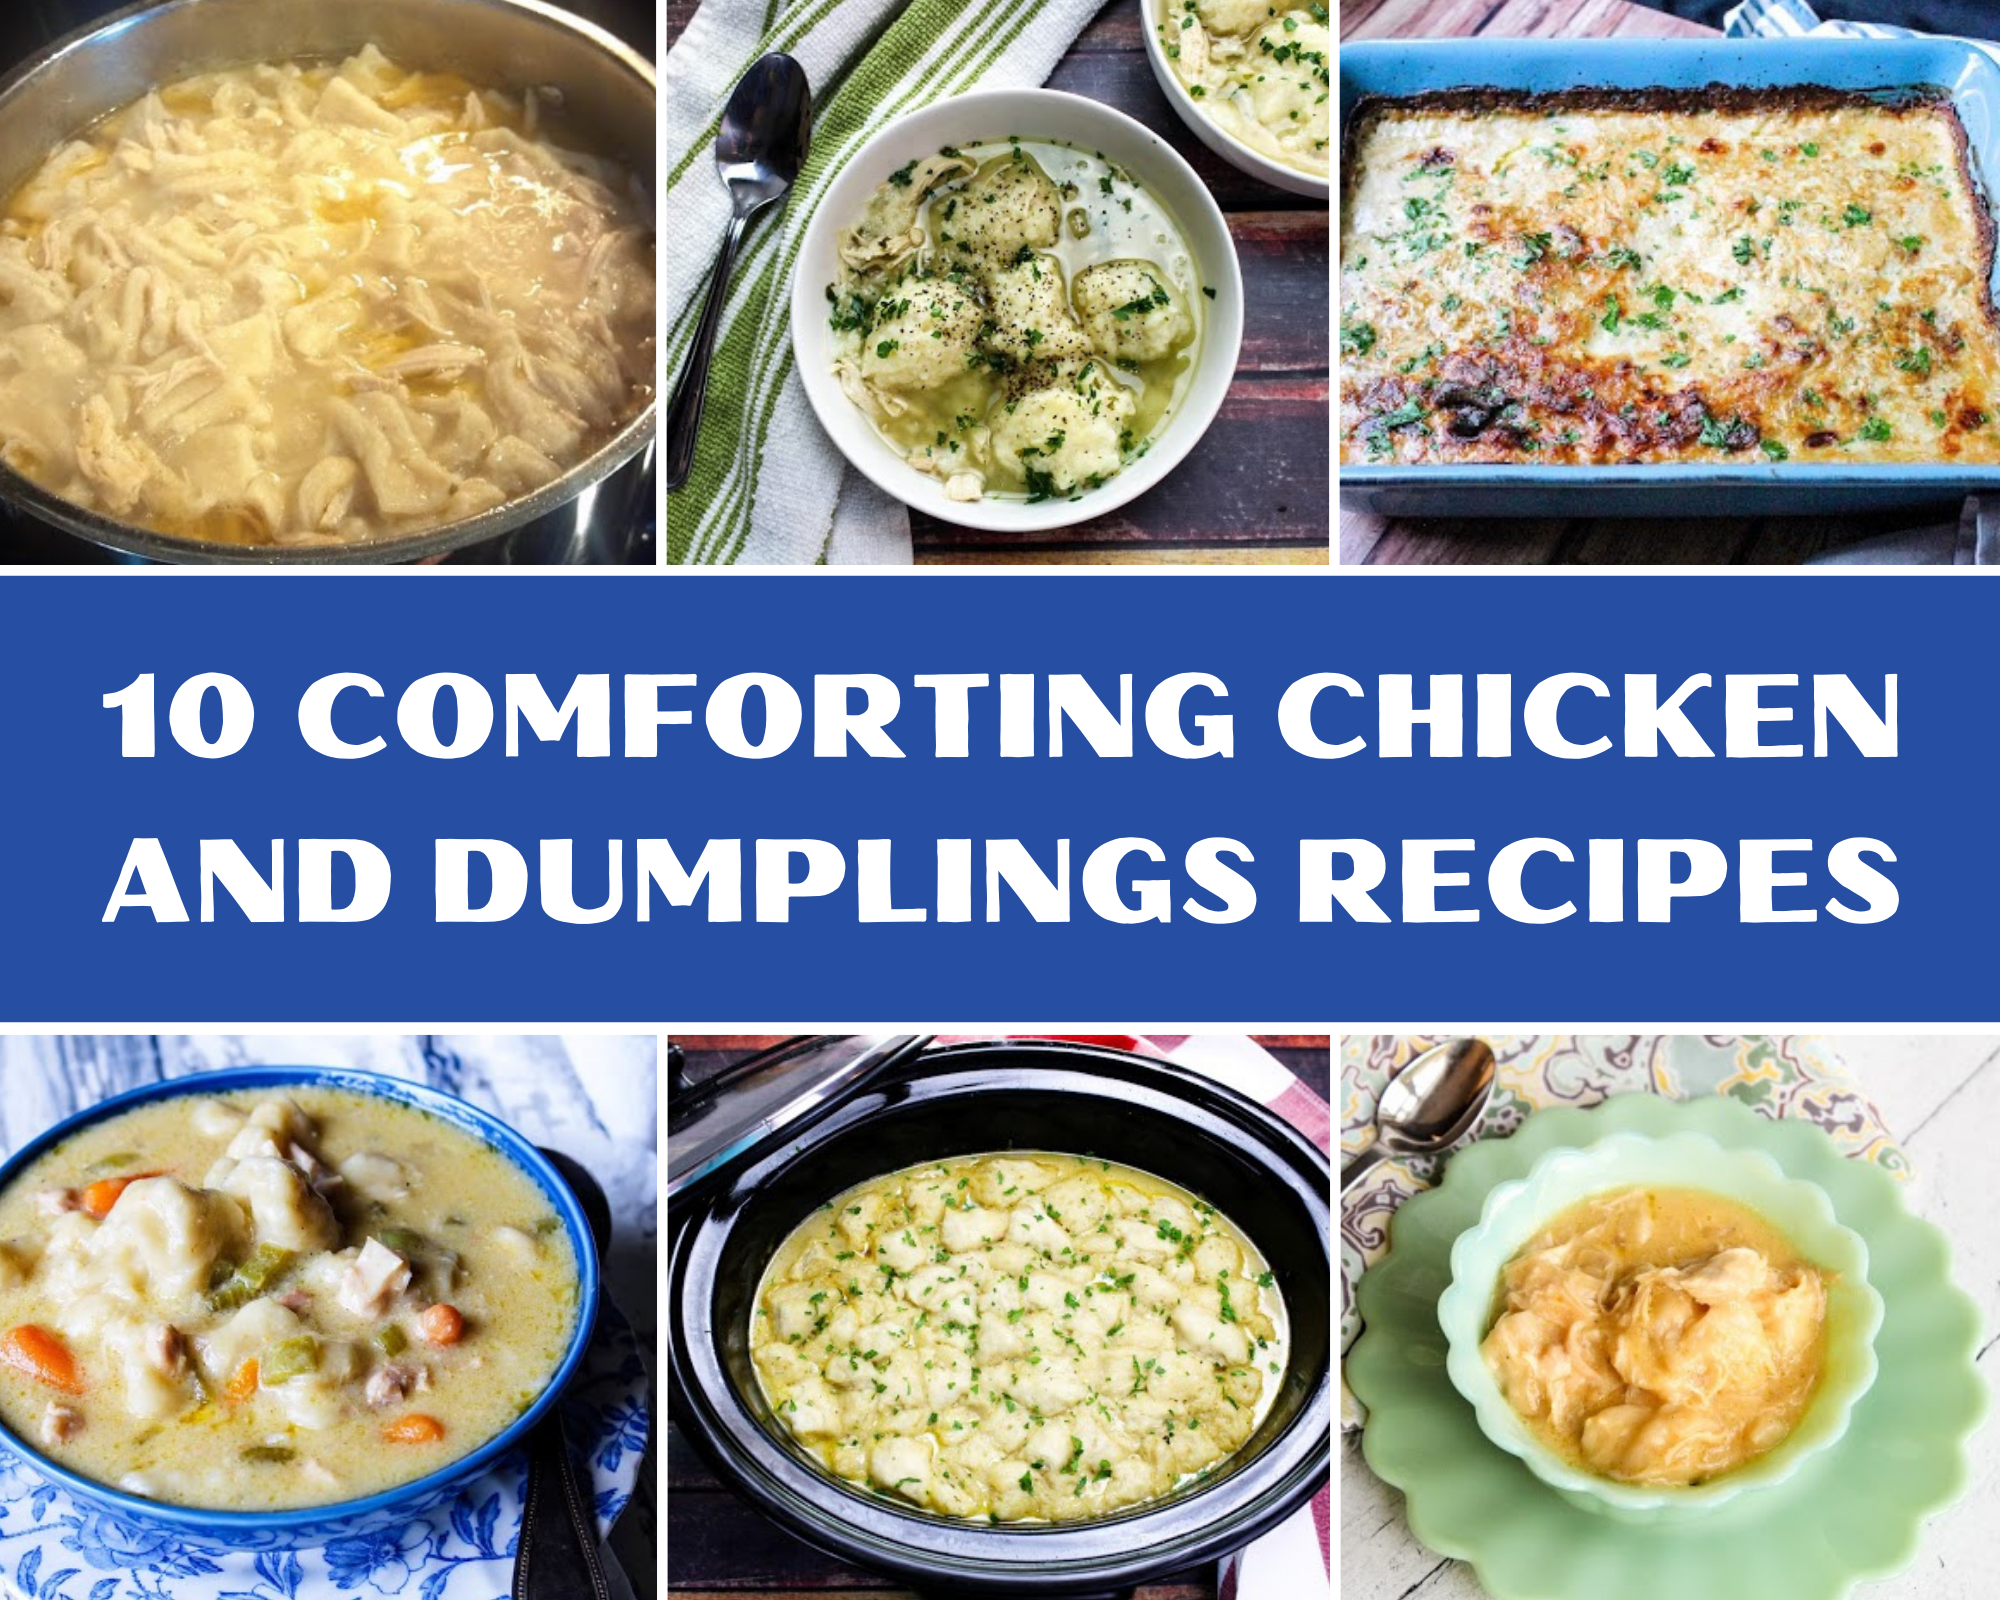 Homemade chicken and dumpling recipes